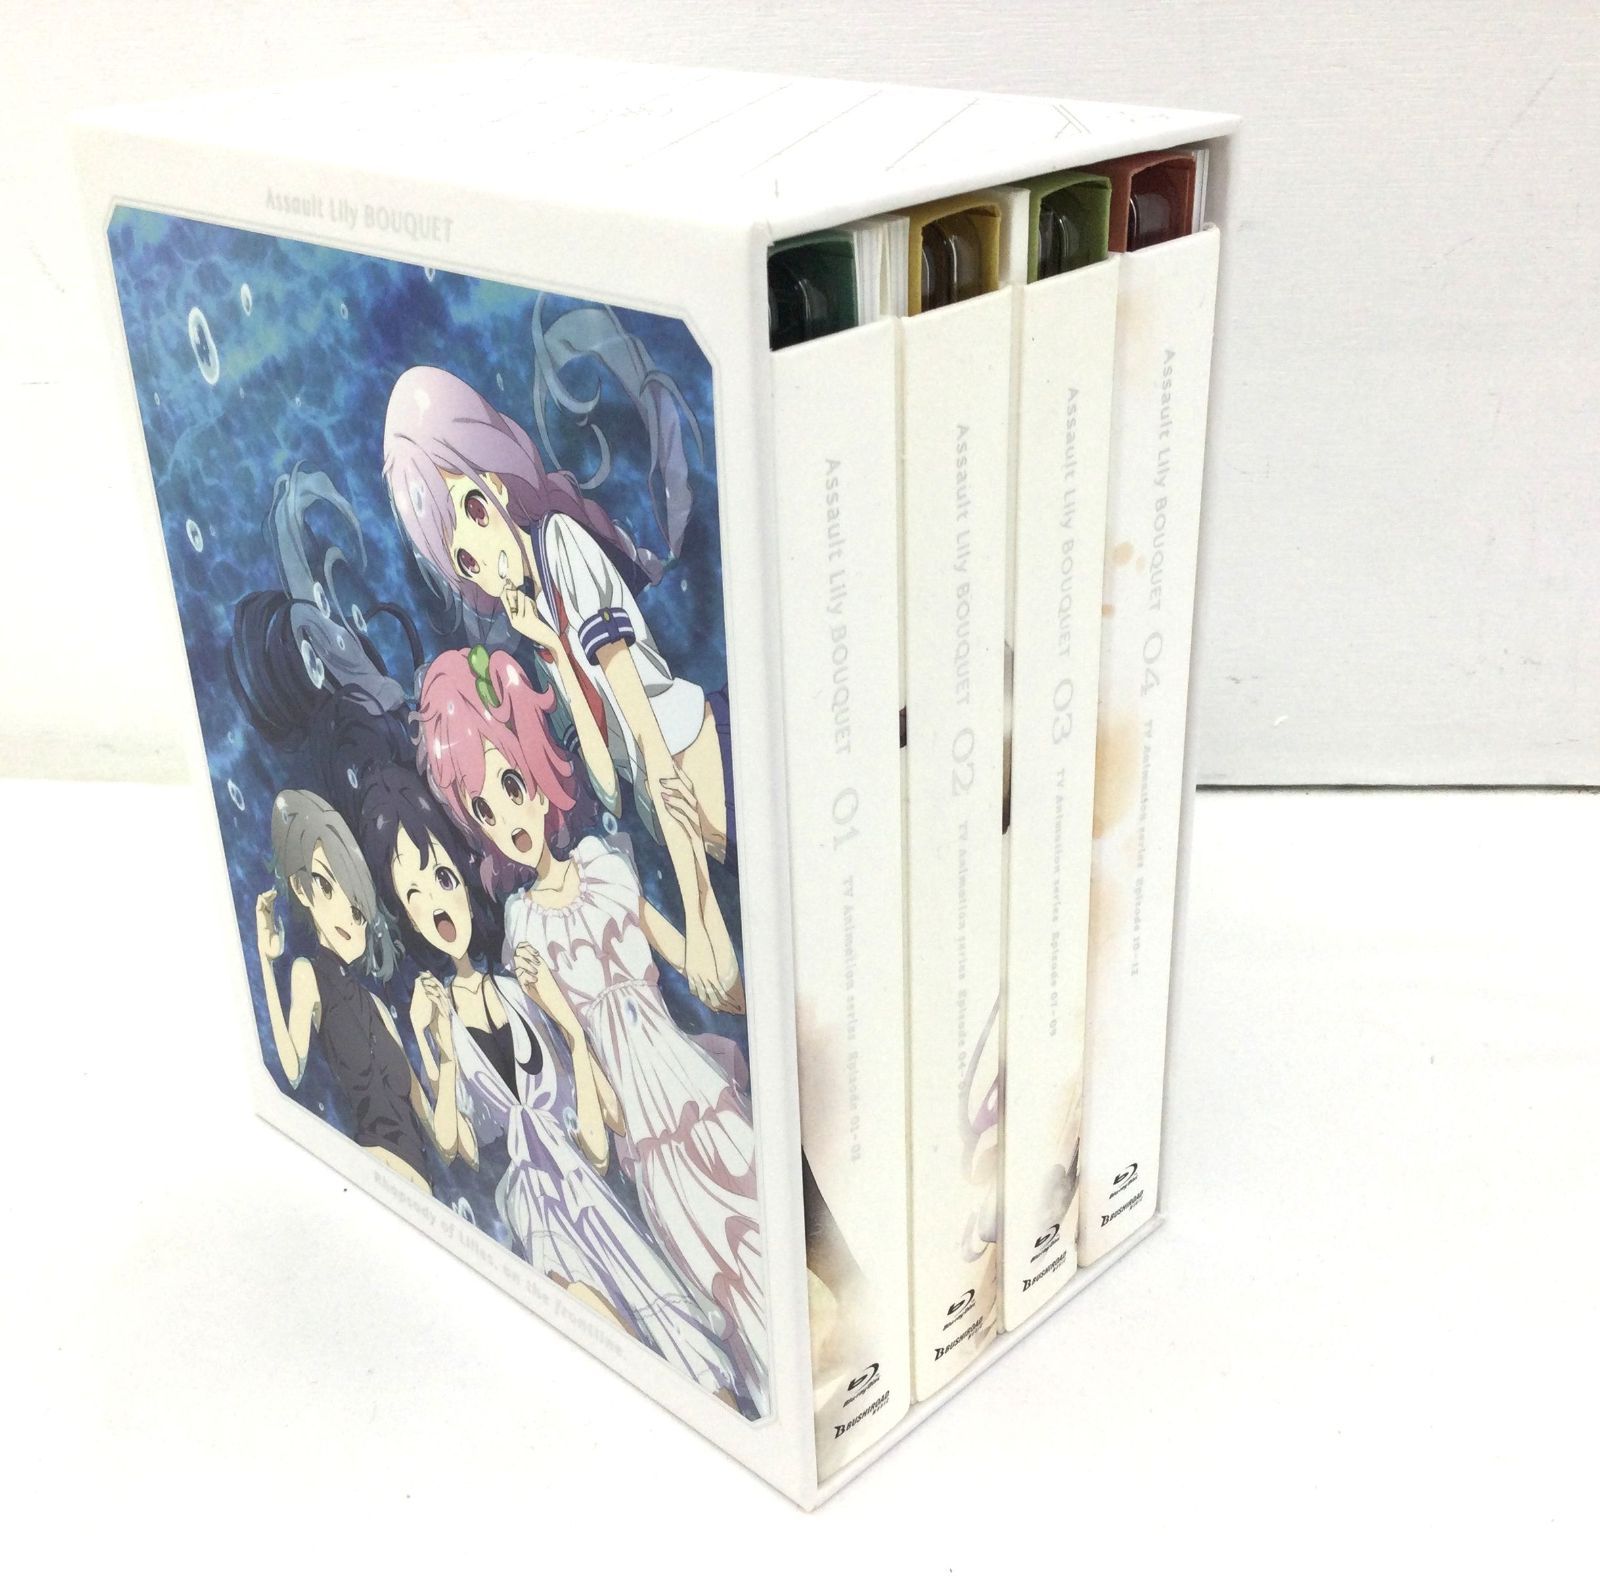 【D0125】アサルトリリィ BOUQUET Blu-ray 全4巻セット & 収納ボックス